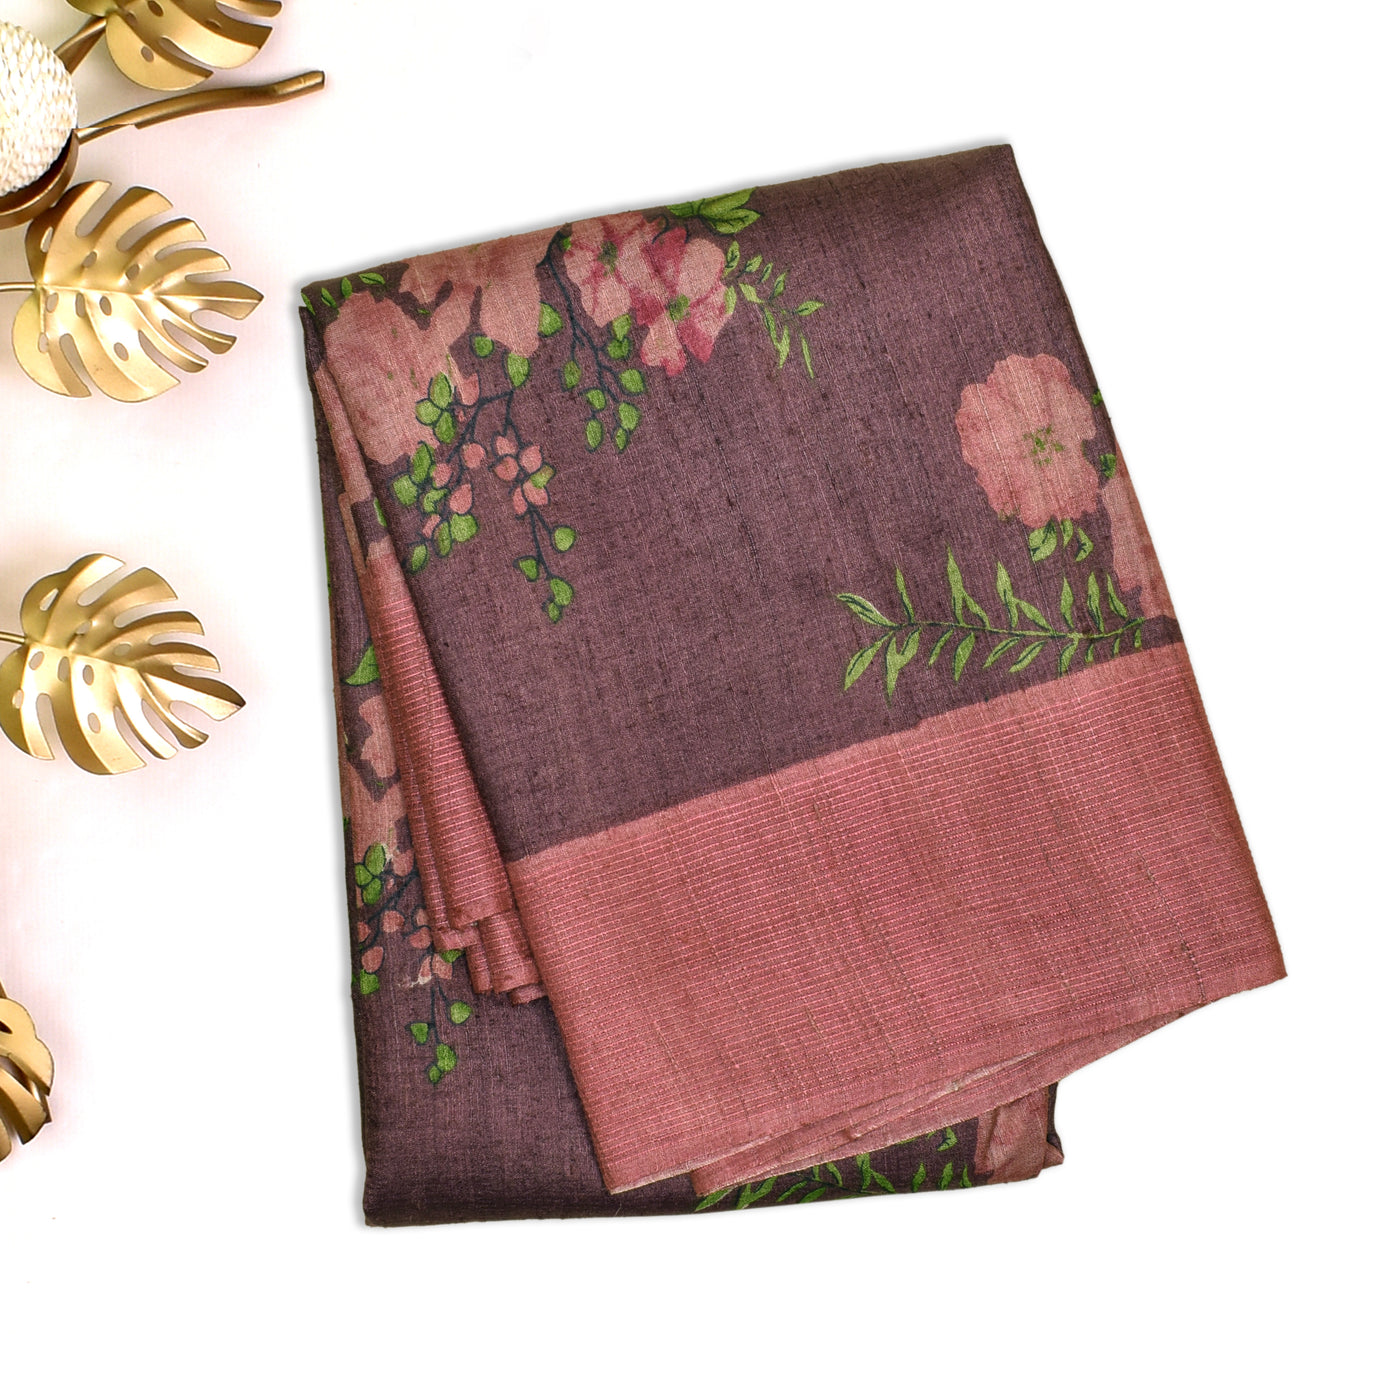 V Pakku Tussar Silk Saree with Floral Printed Design